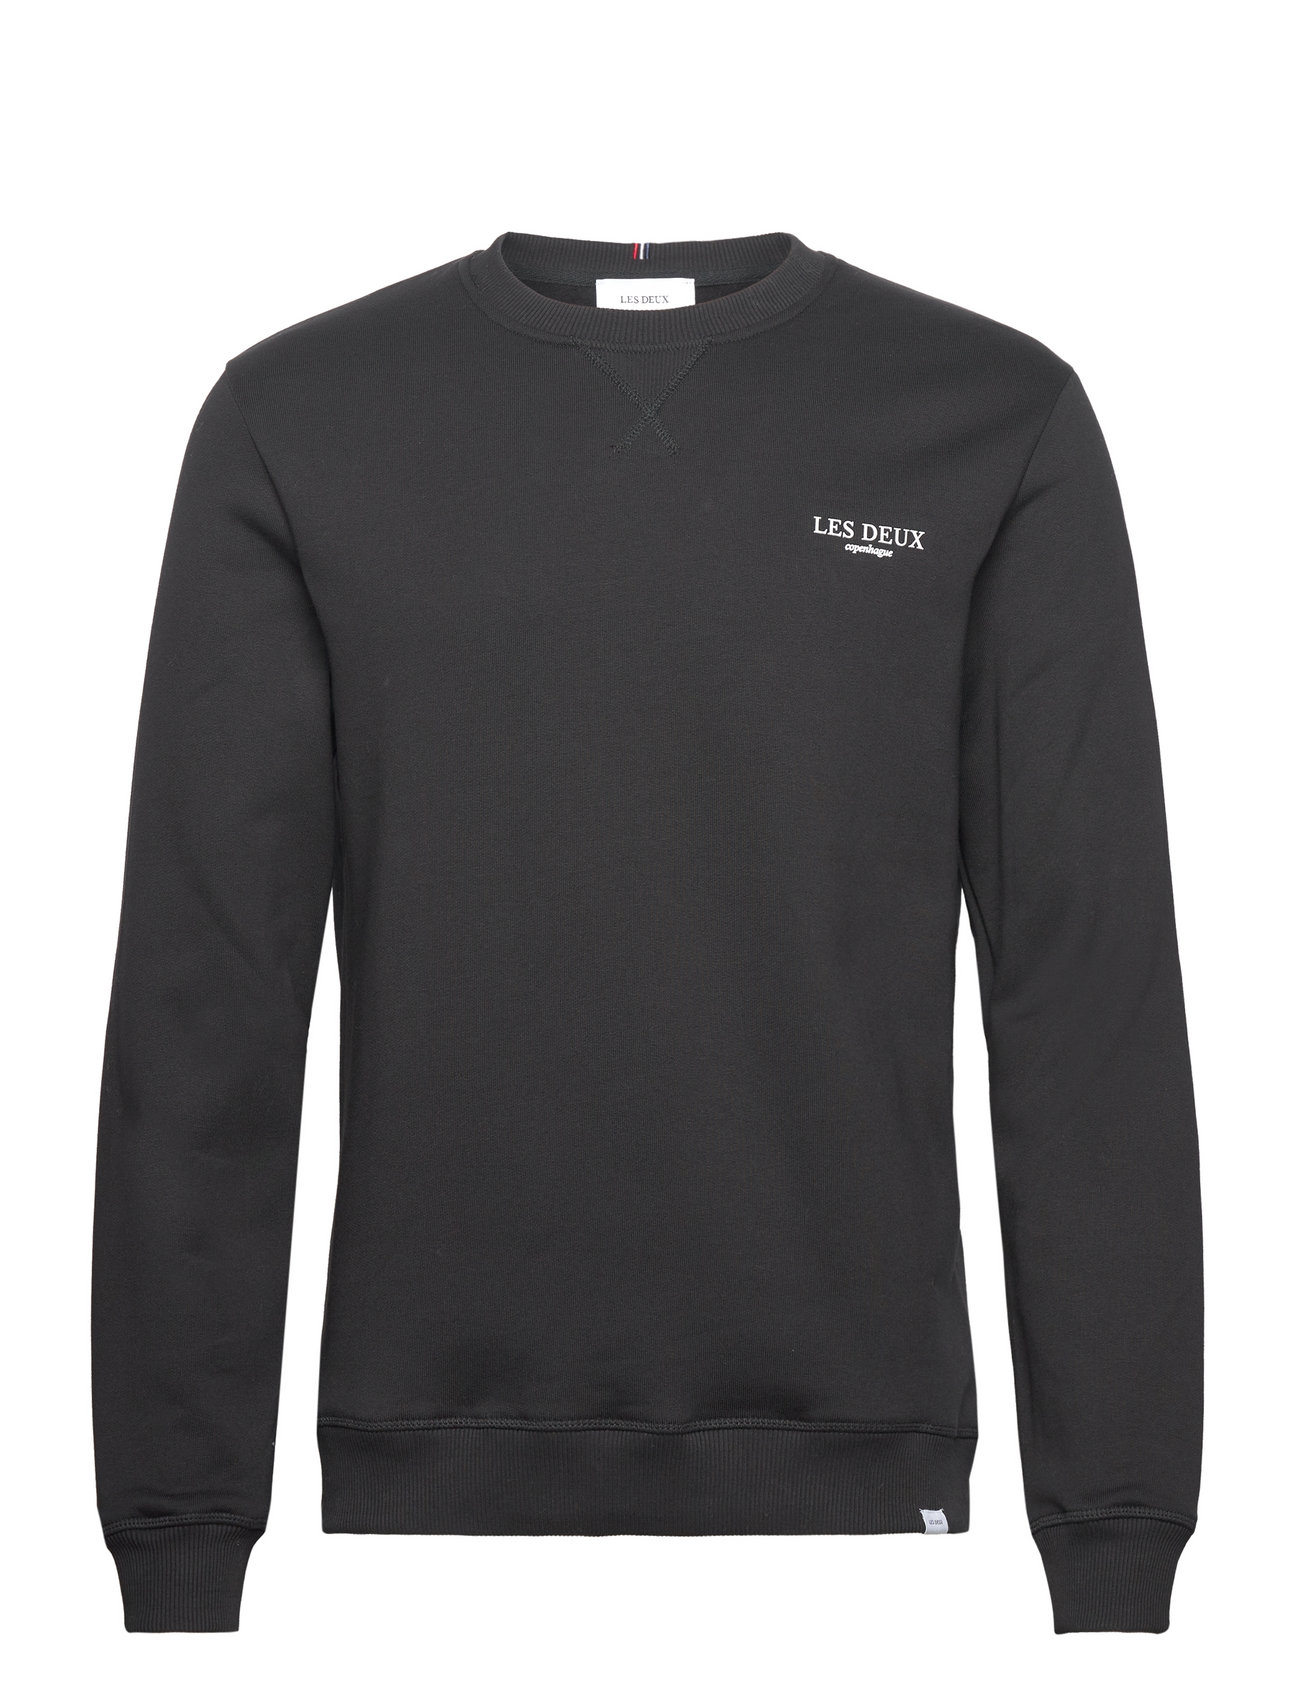 Toulon Sweatshirt Tops Sweatshirts & Hoodies Sweatshirts Black Les Deux